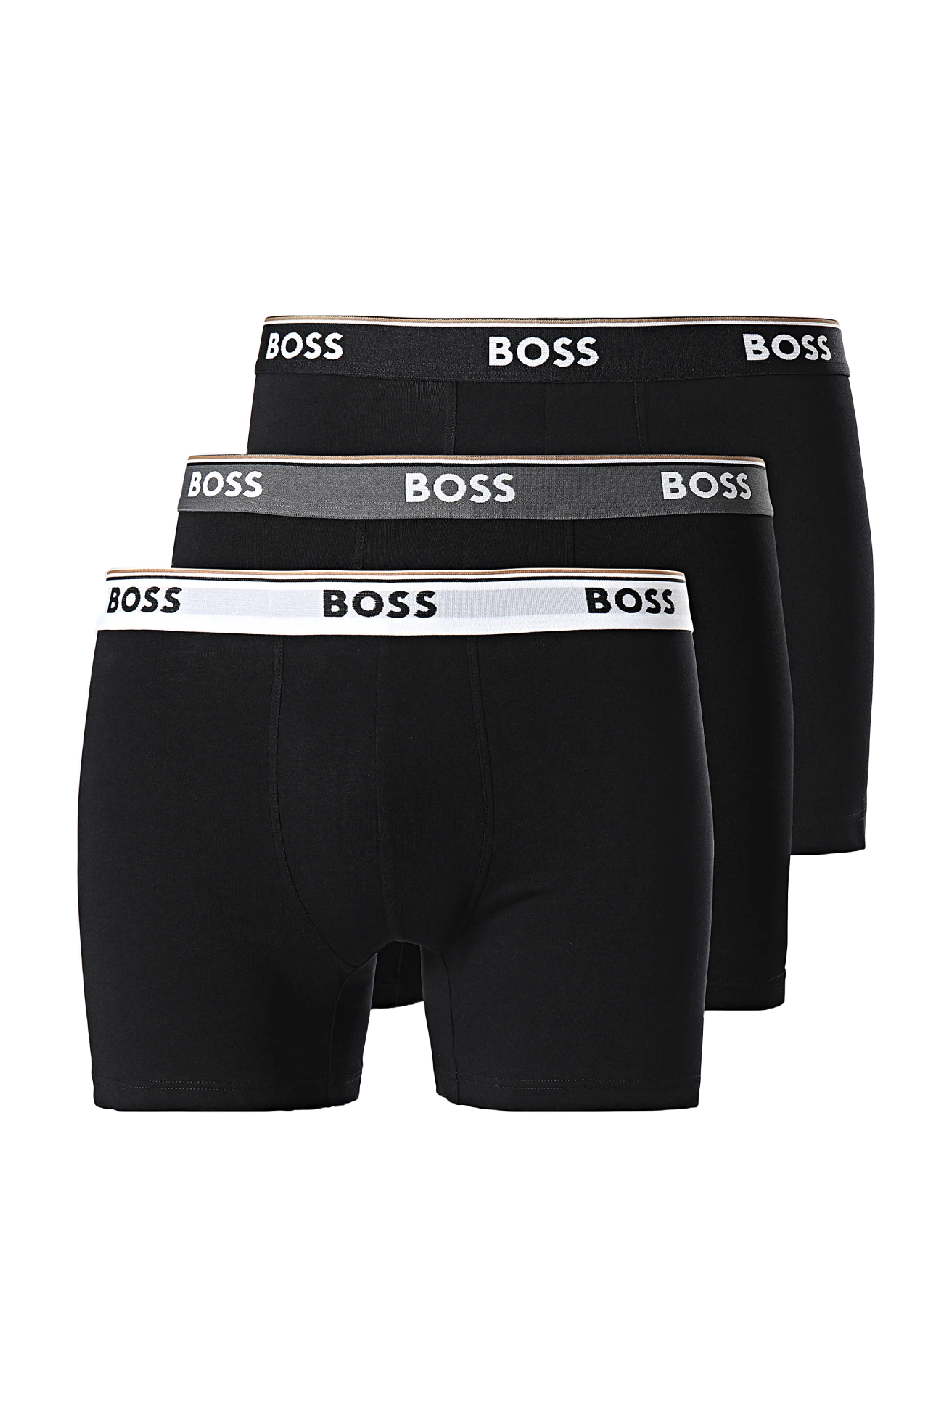 Boss 3 Pack Men's Power Boxer Brief